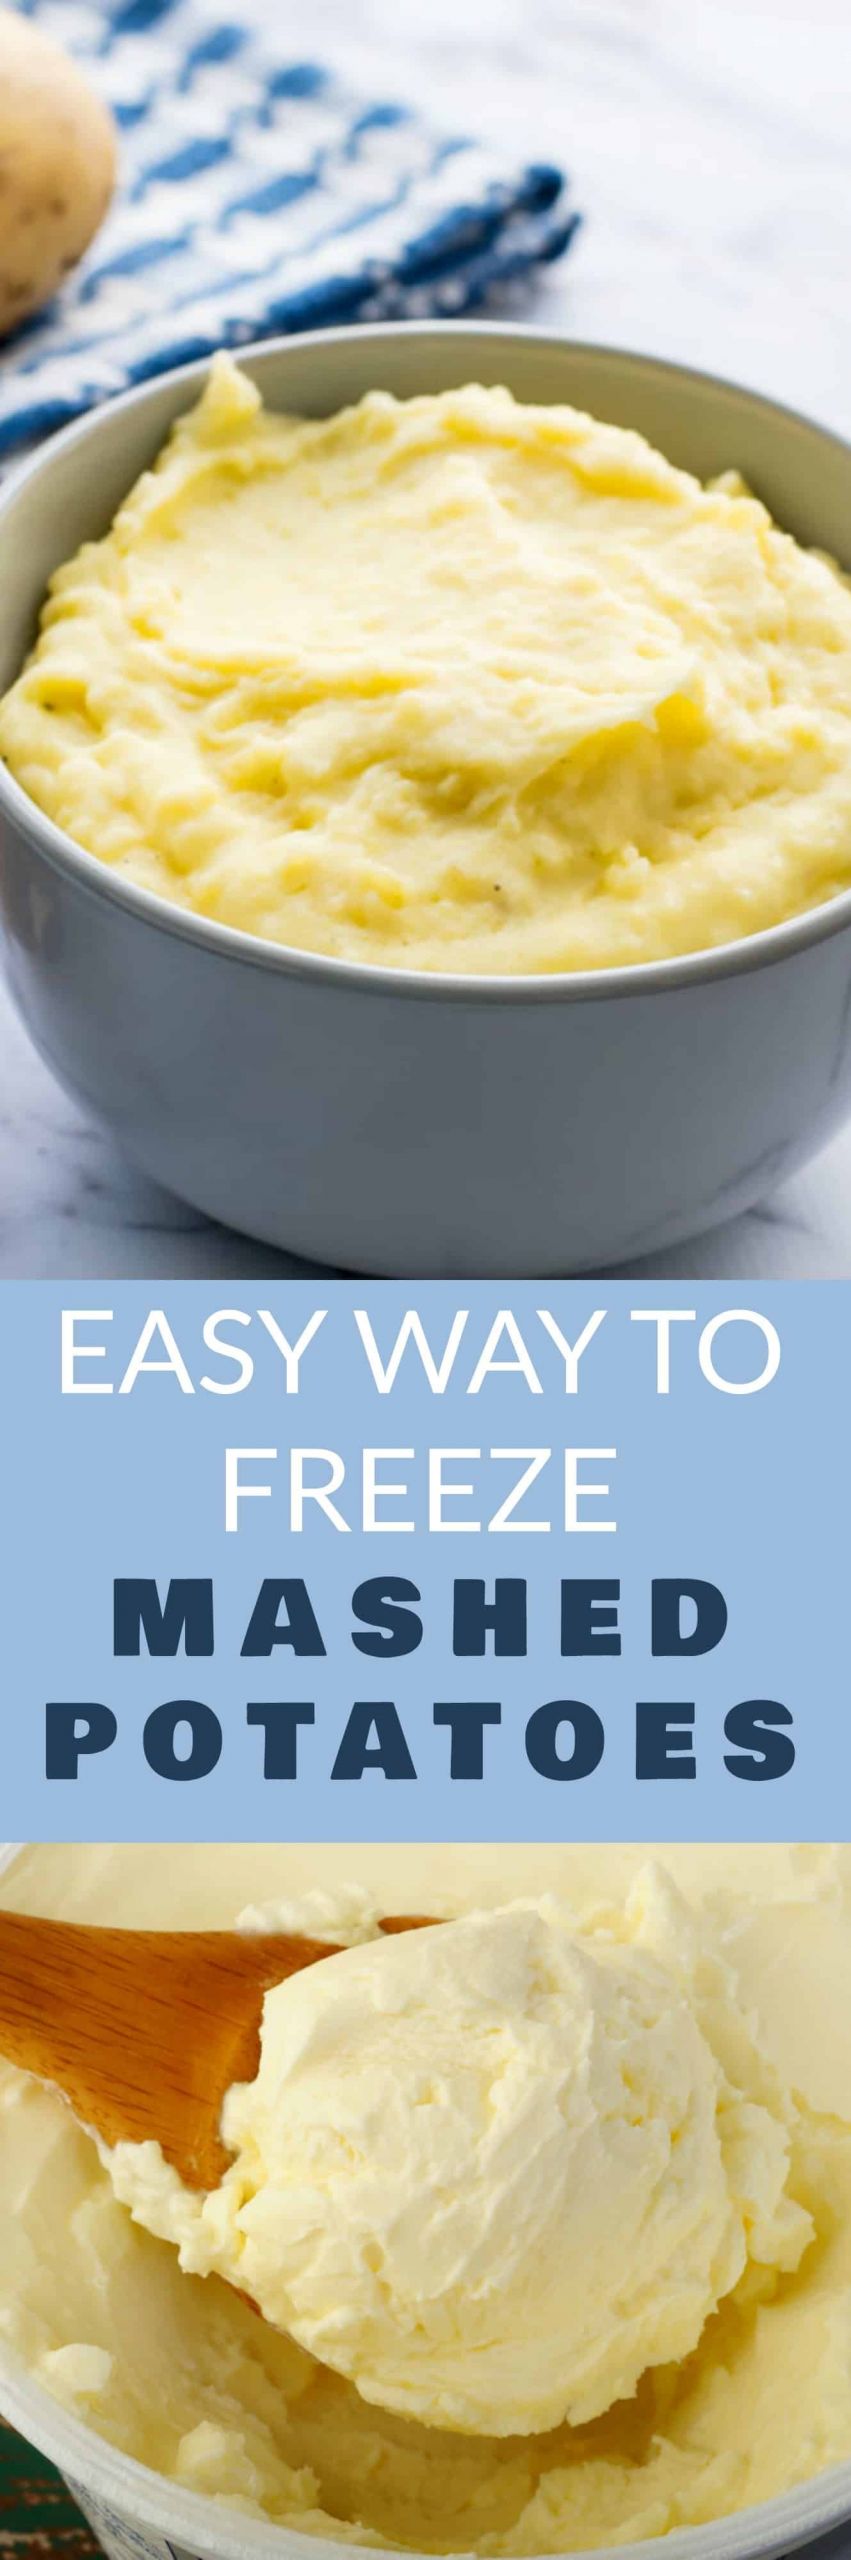 Freezing Mashed Potatoes
 Easy Way to Freeze Mashed Potatoes Brooklyn Farm Girl